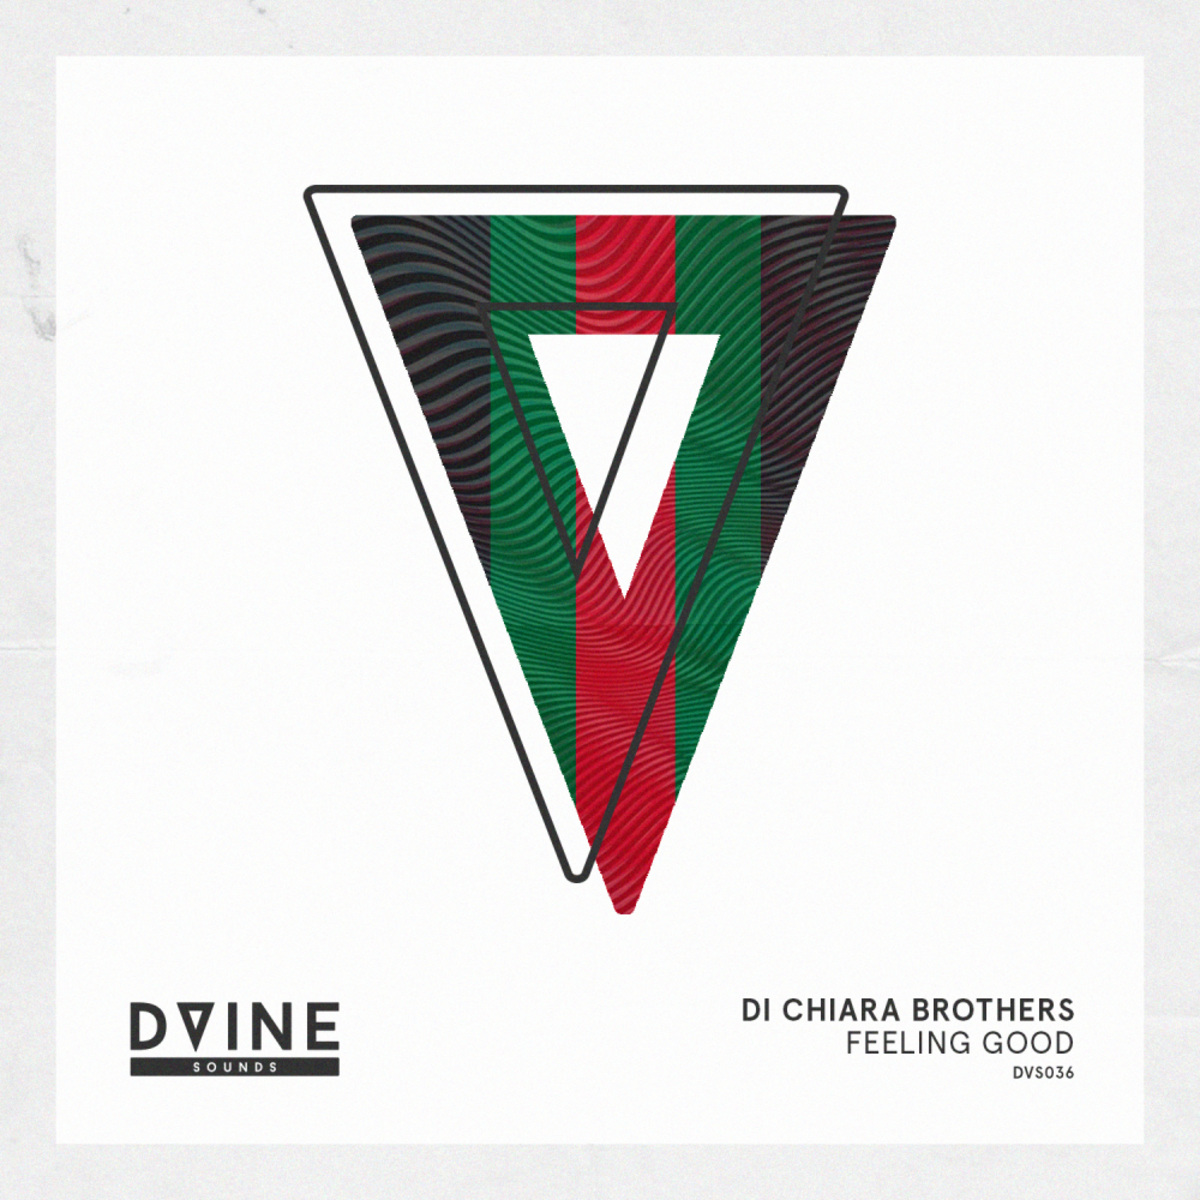 Di Chiara Brothers - Feeling Good / D-Vine Sounds